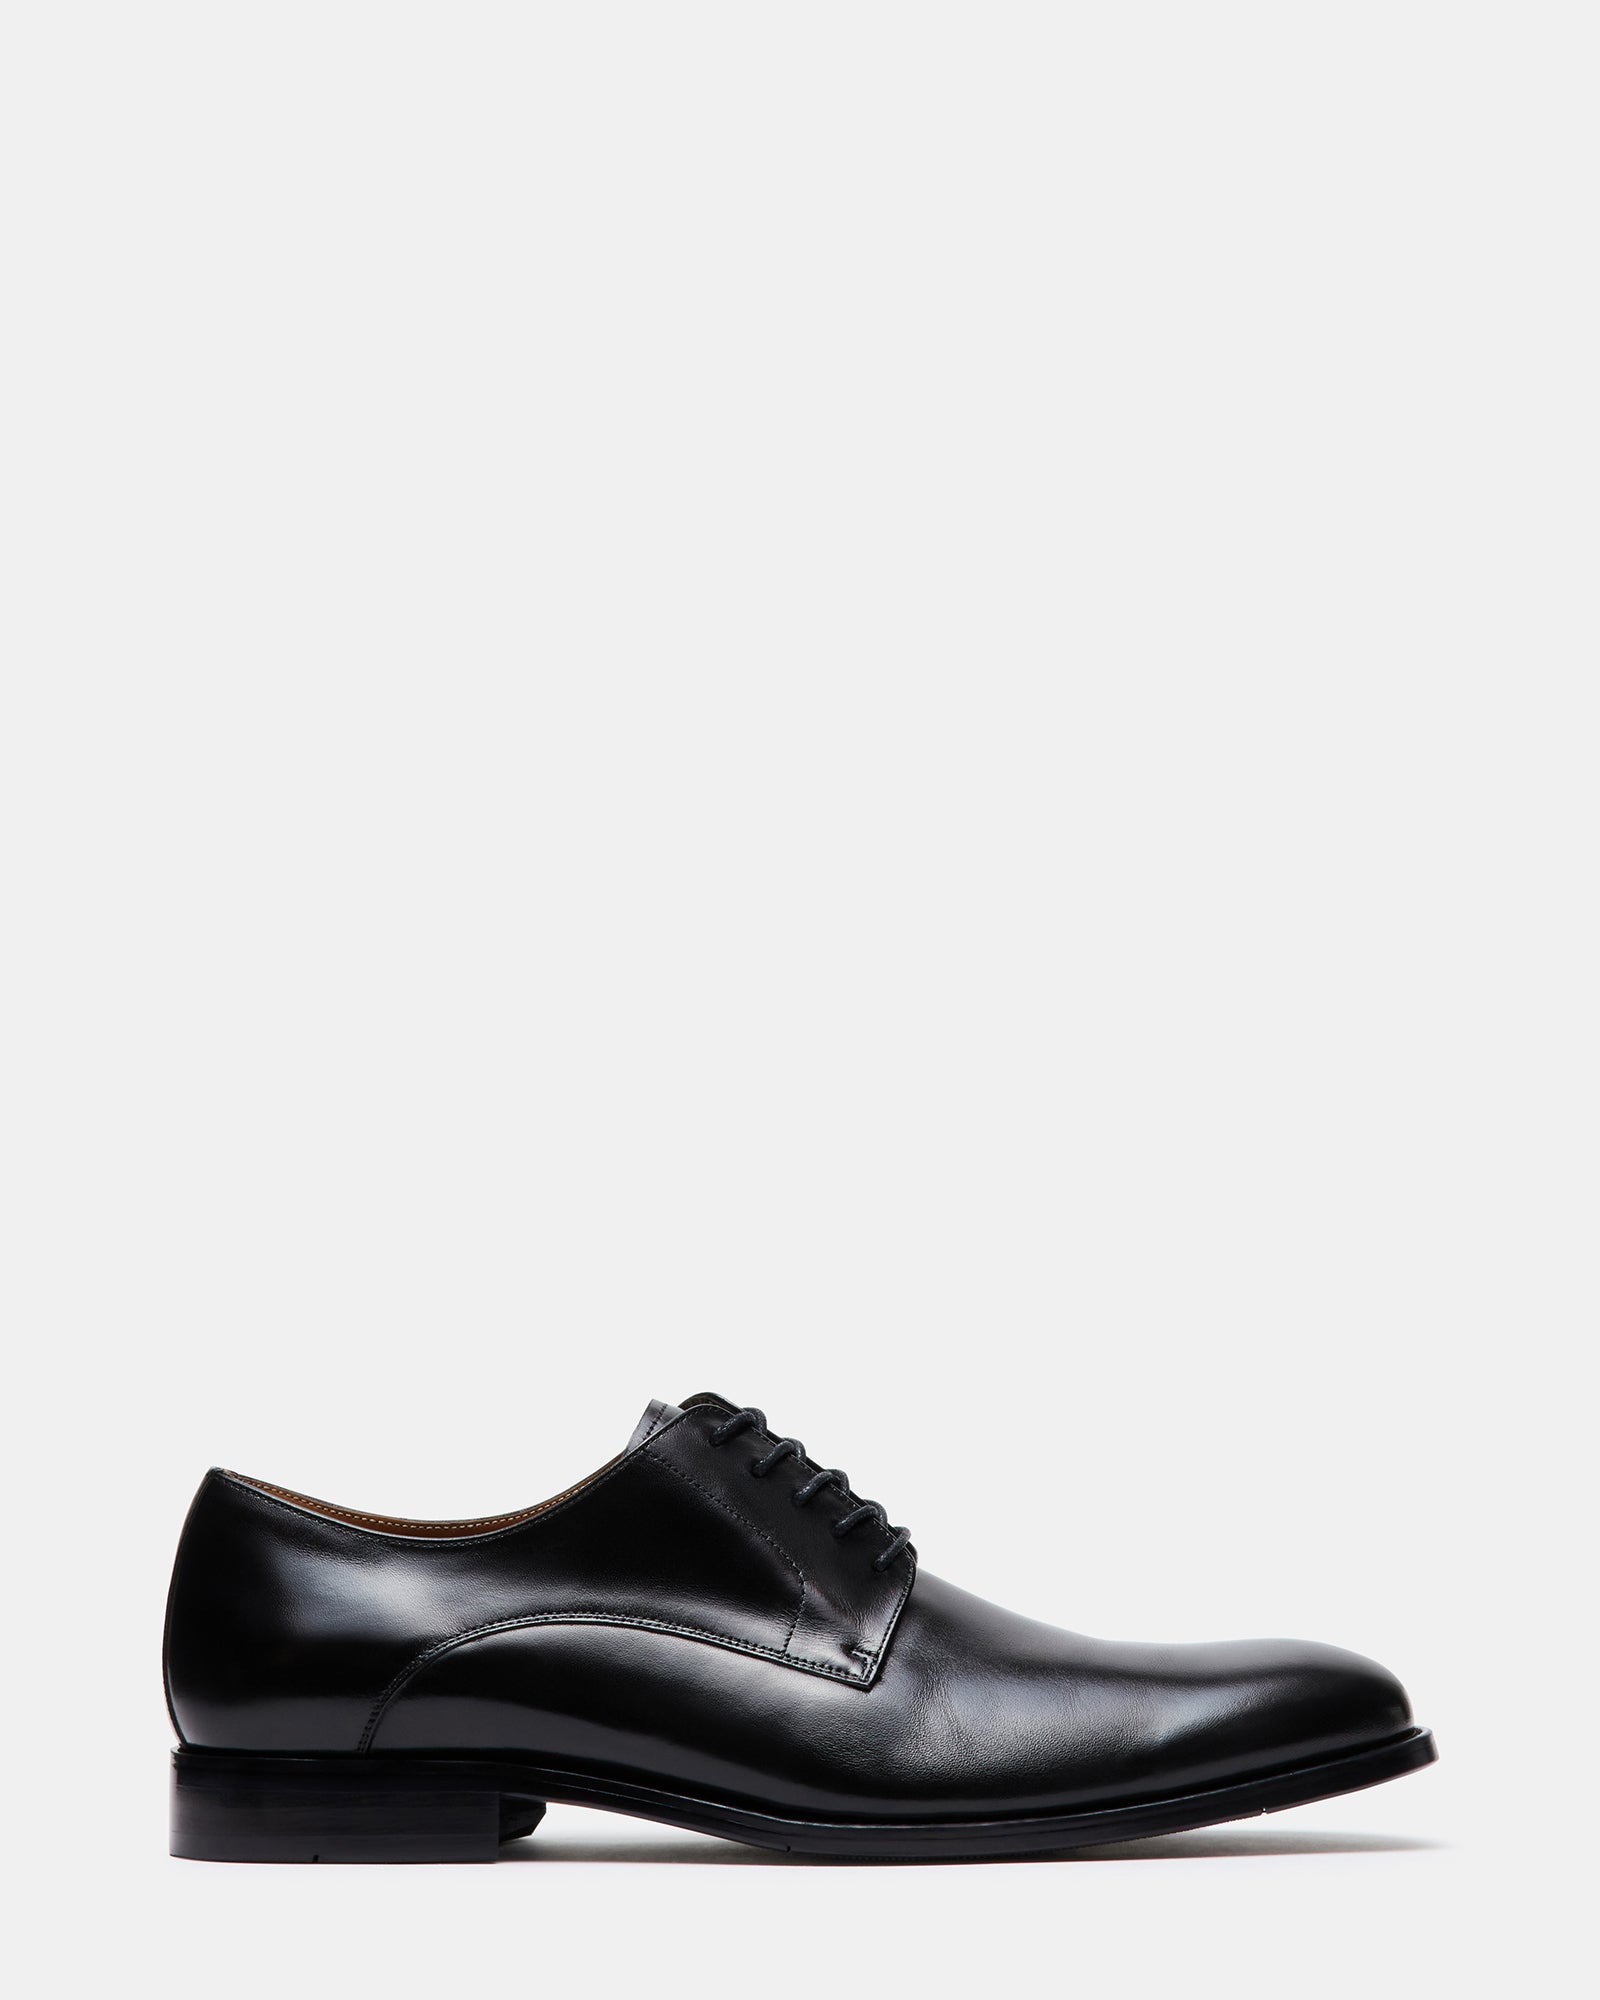 Steve Madden Men's Daymin Black Leather Dress Shoes